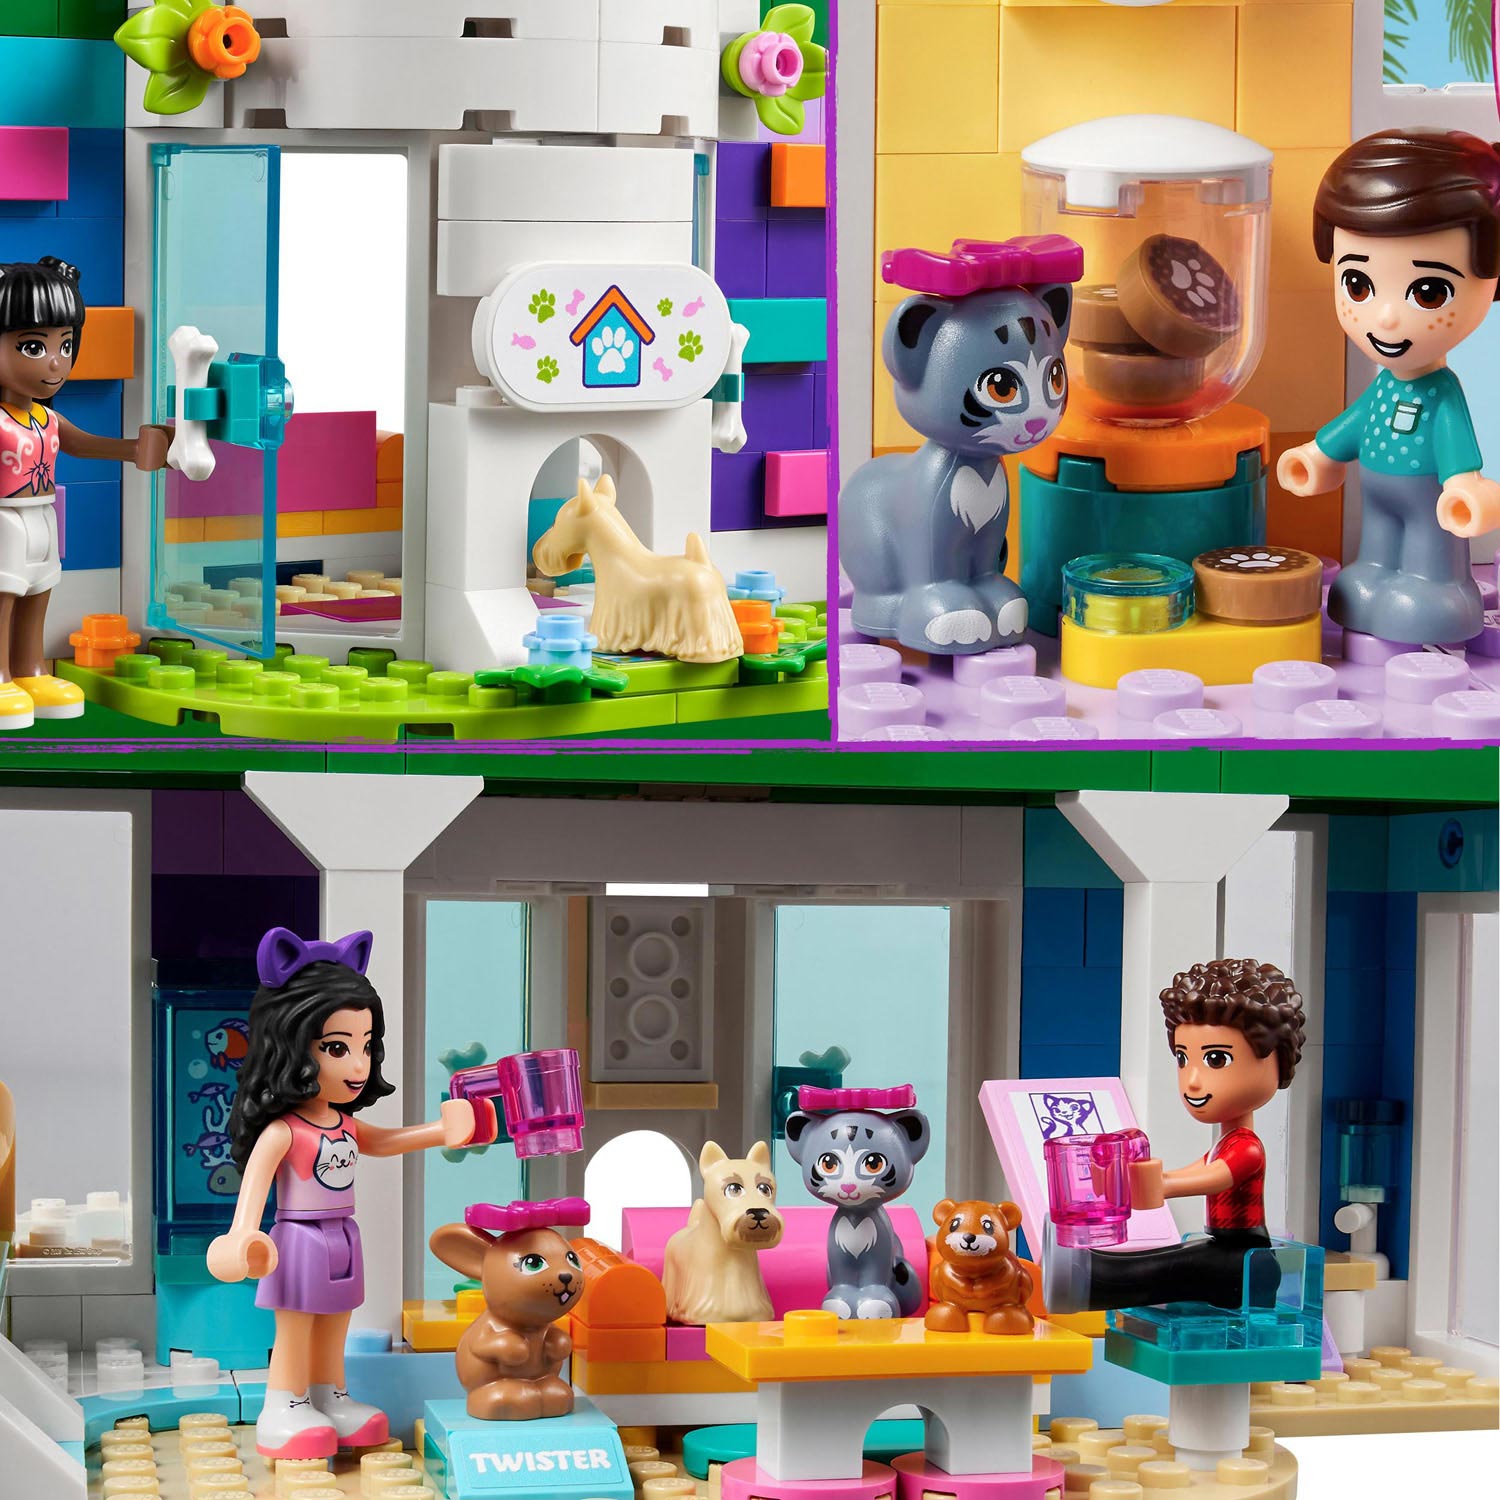 Lego Friends 41718 Huisdieren Opvangcentrum